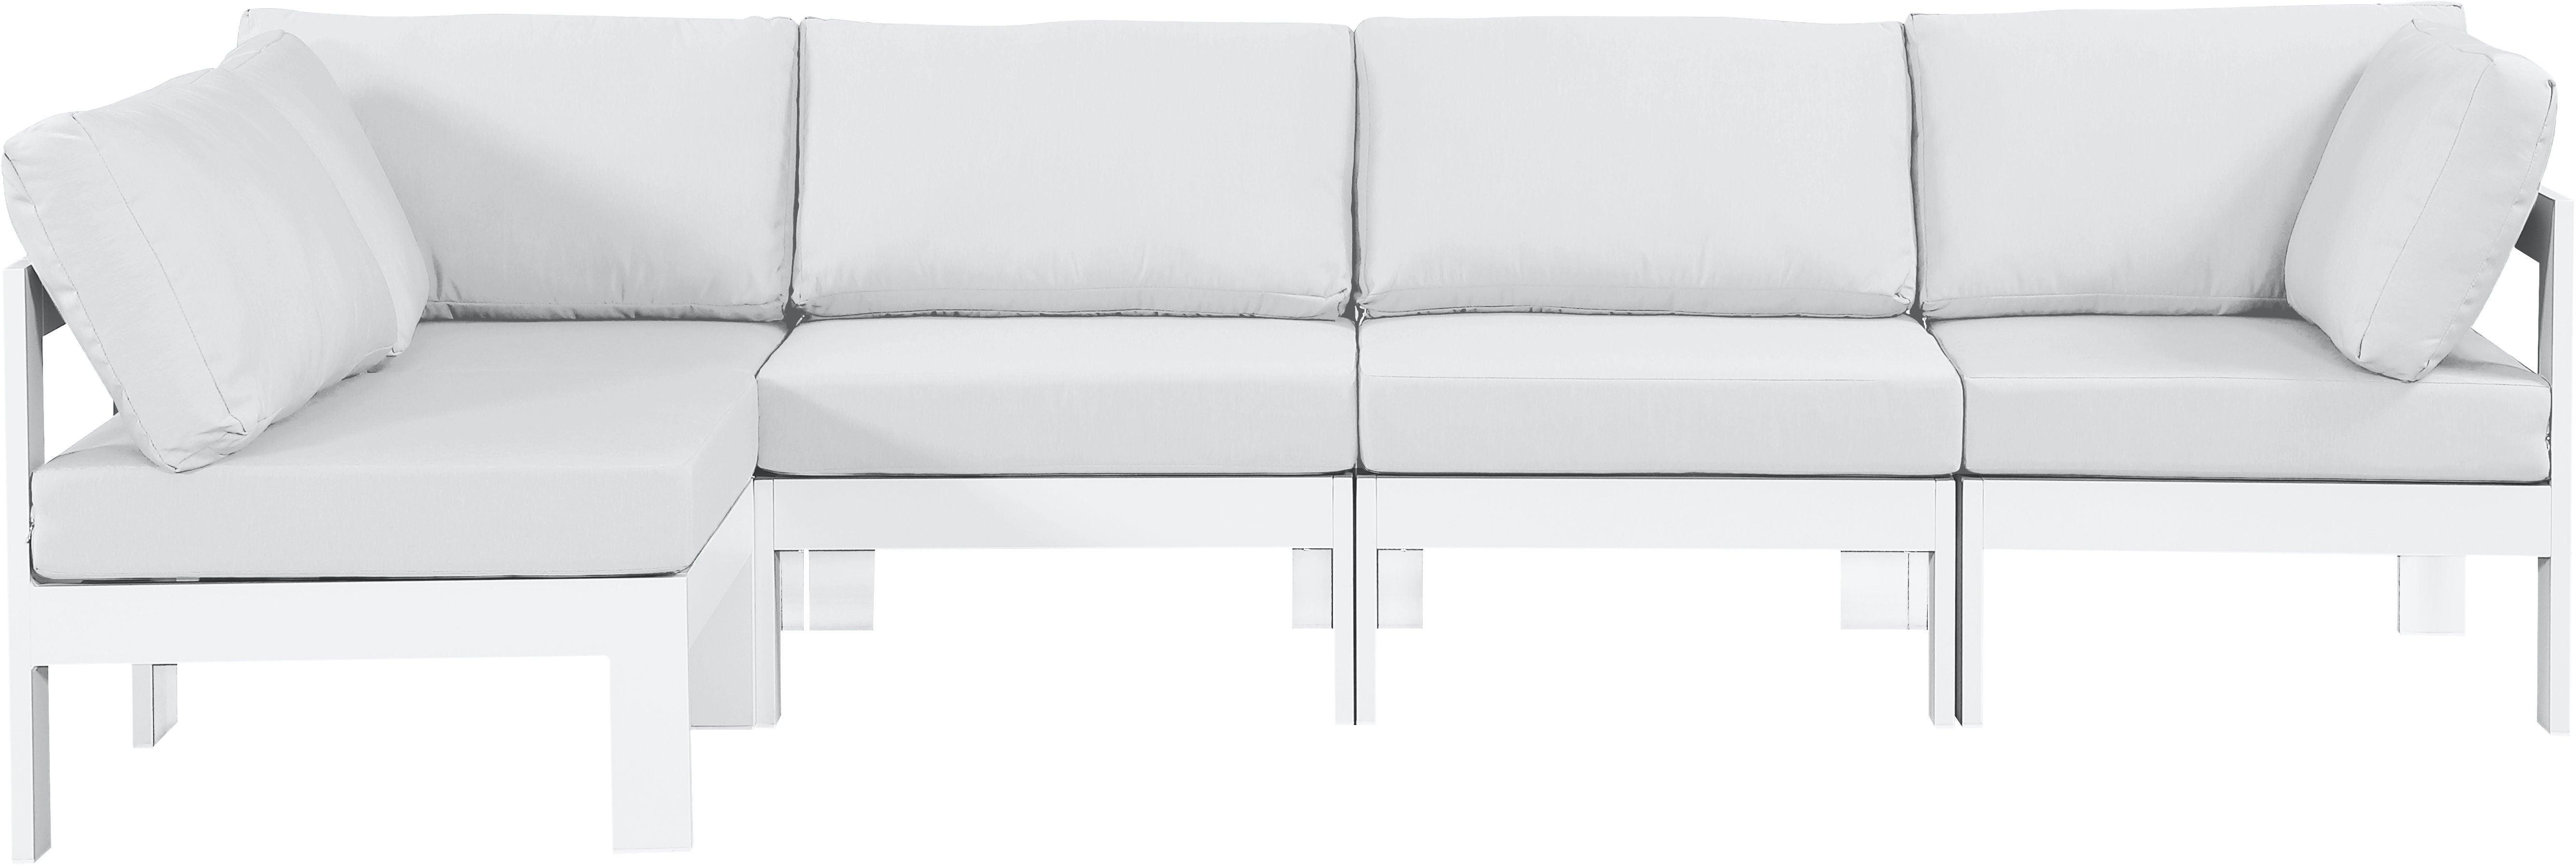 Meridian Furniture - Nizuc - Outdoor Patio Modular Sectional - White - Fabric - 5th Avenue Furniture